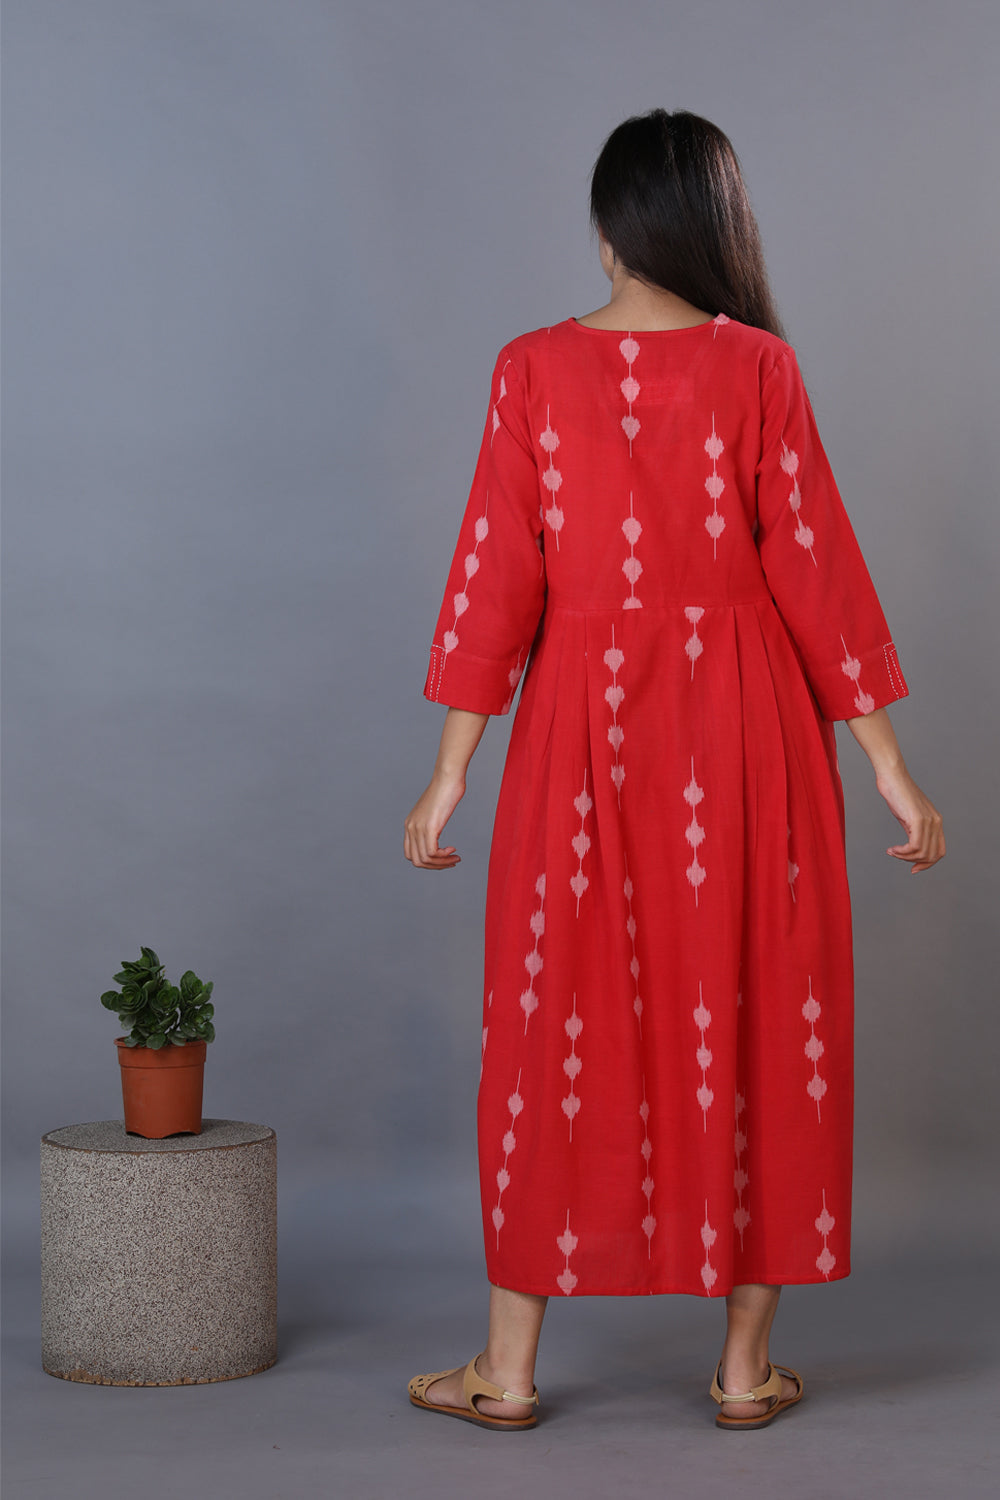 Crimson red handwoven cotton Ikat dress